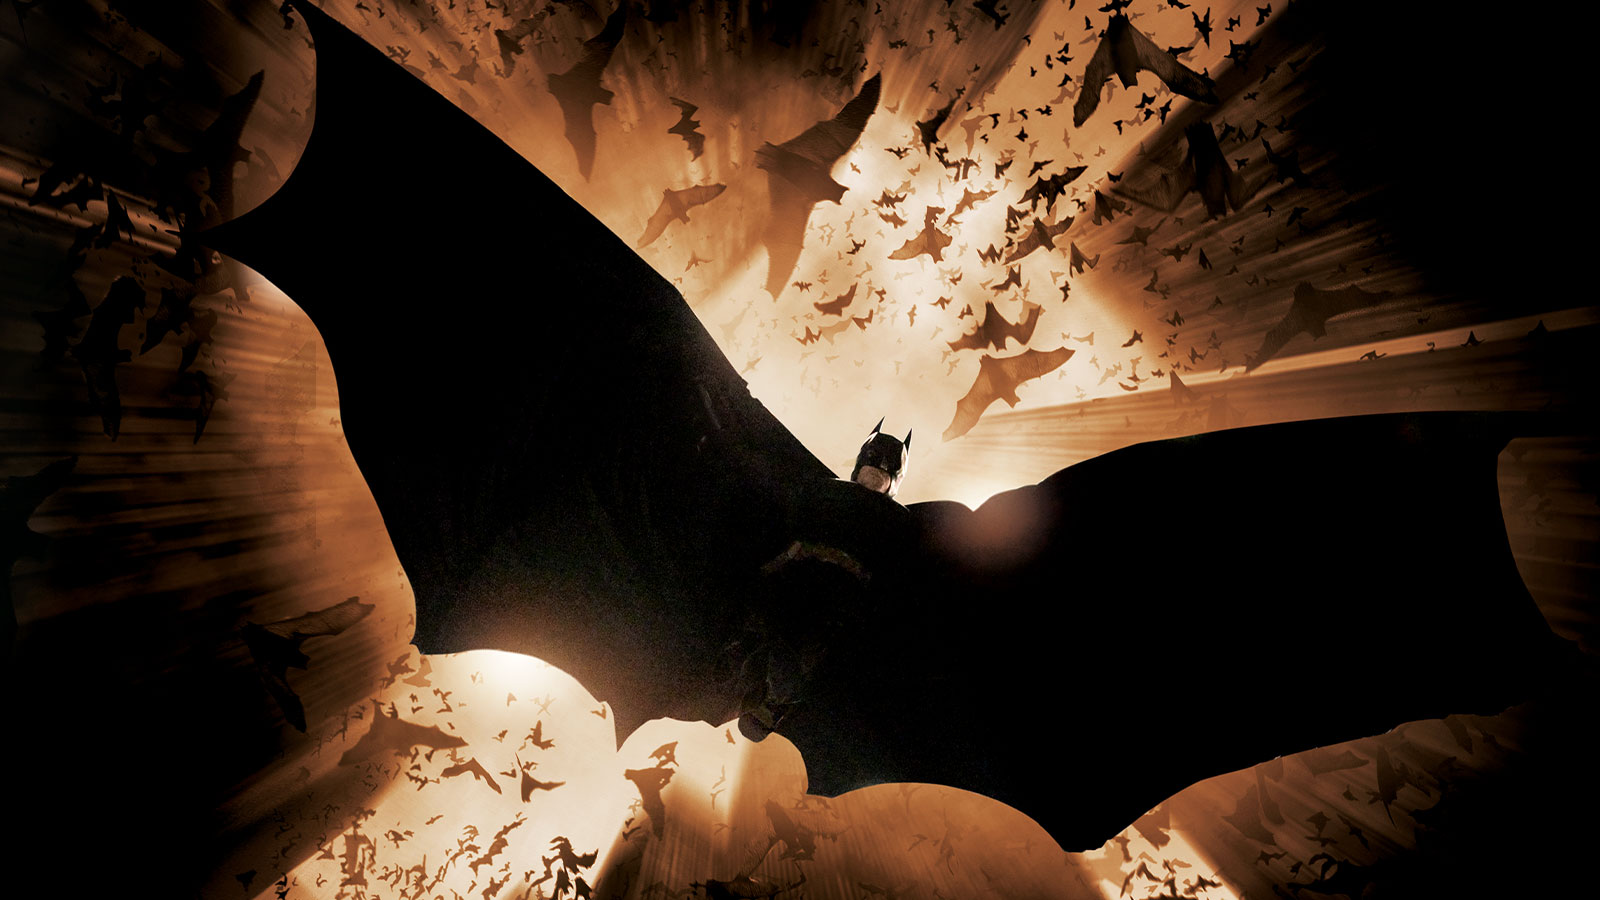 Batman начало. Batman begins 2005. Бэтмен: начало (Batman begins) 2005 poster. Poster Бэтмен начало.